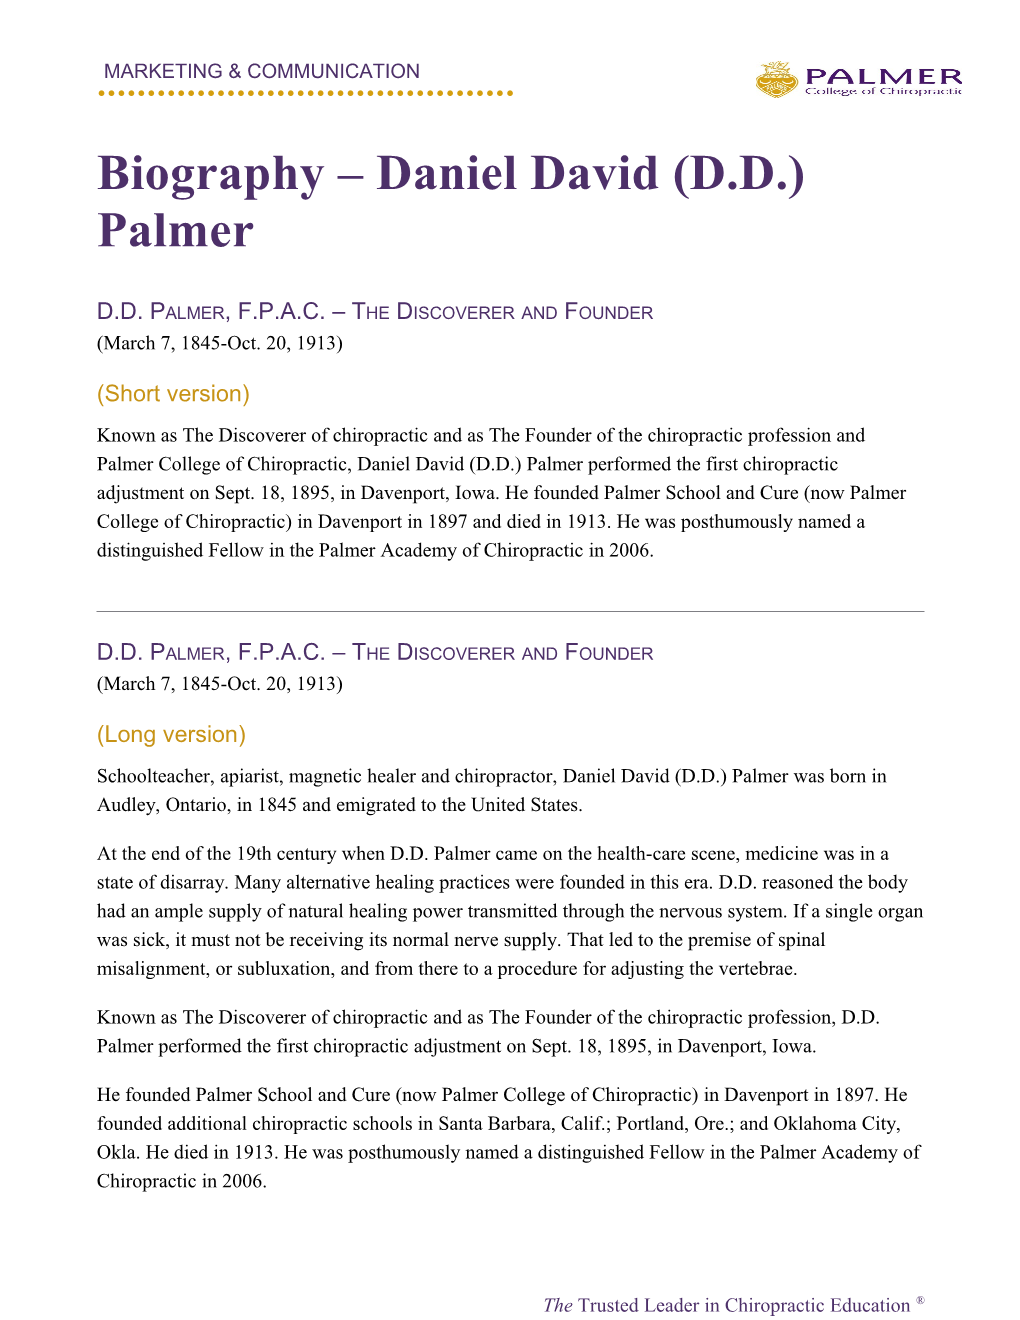 Biography Daniel David (D.D.) Palmer